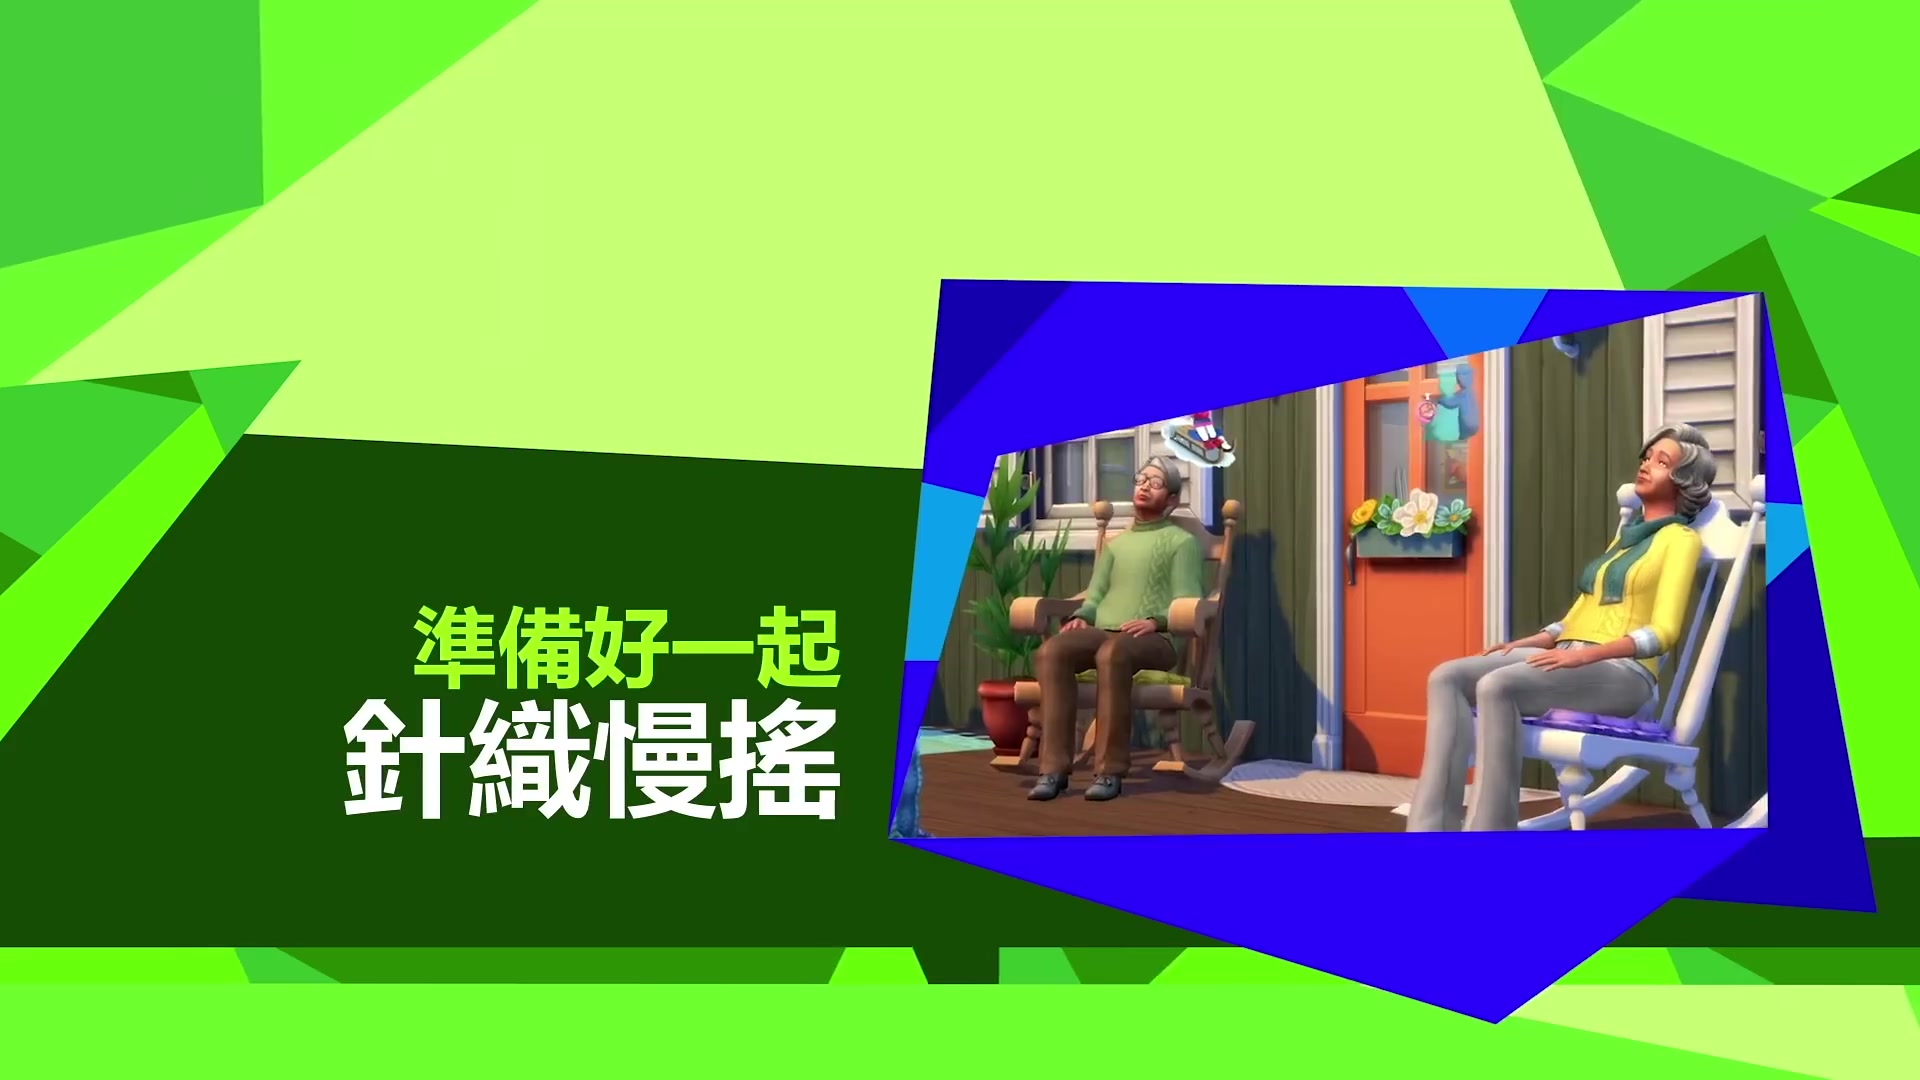 EA《模拟人生4》新扩充包“巧缝妙织”中文宣传片